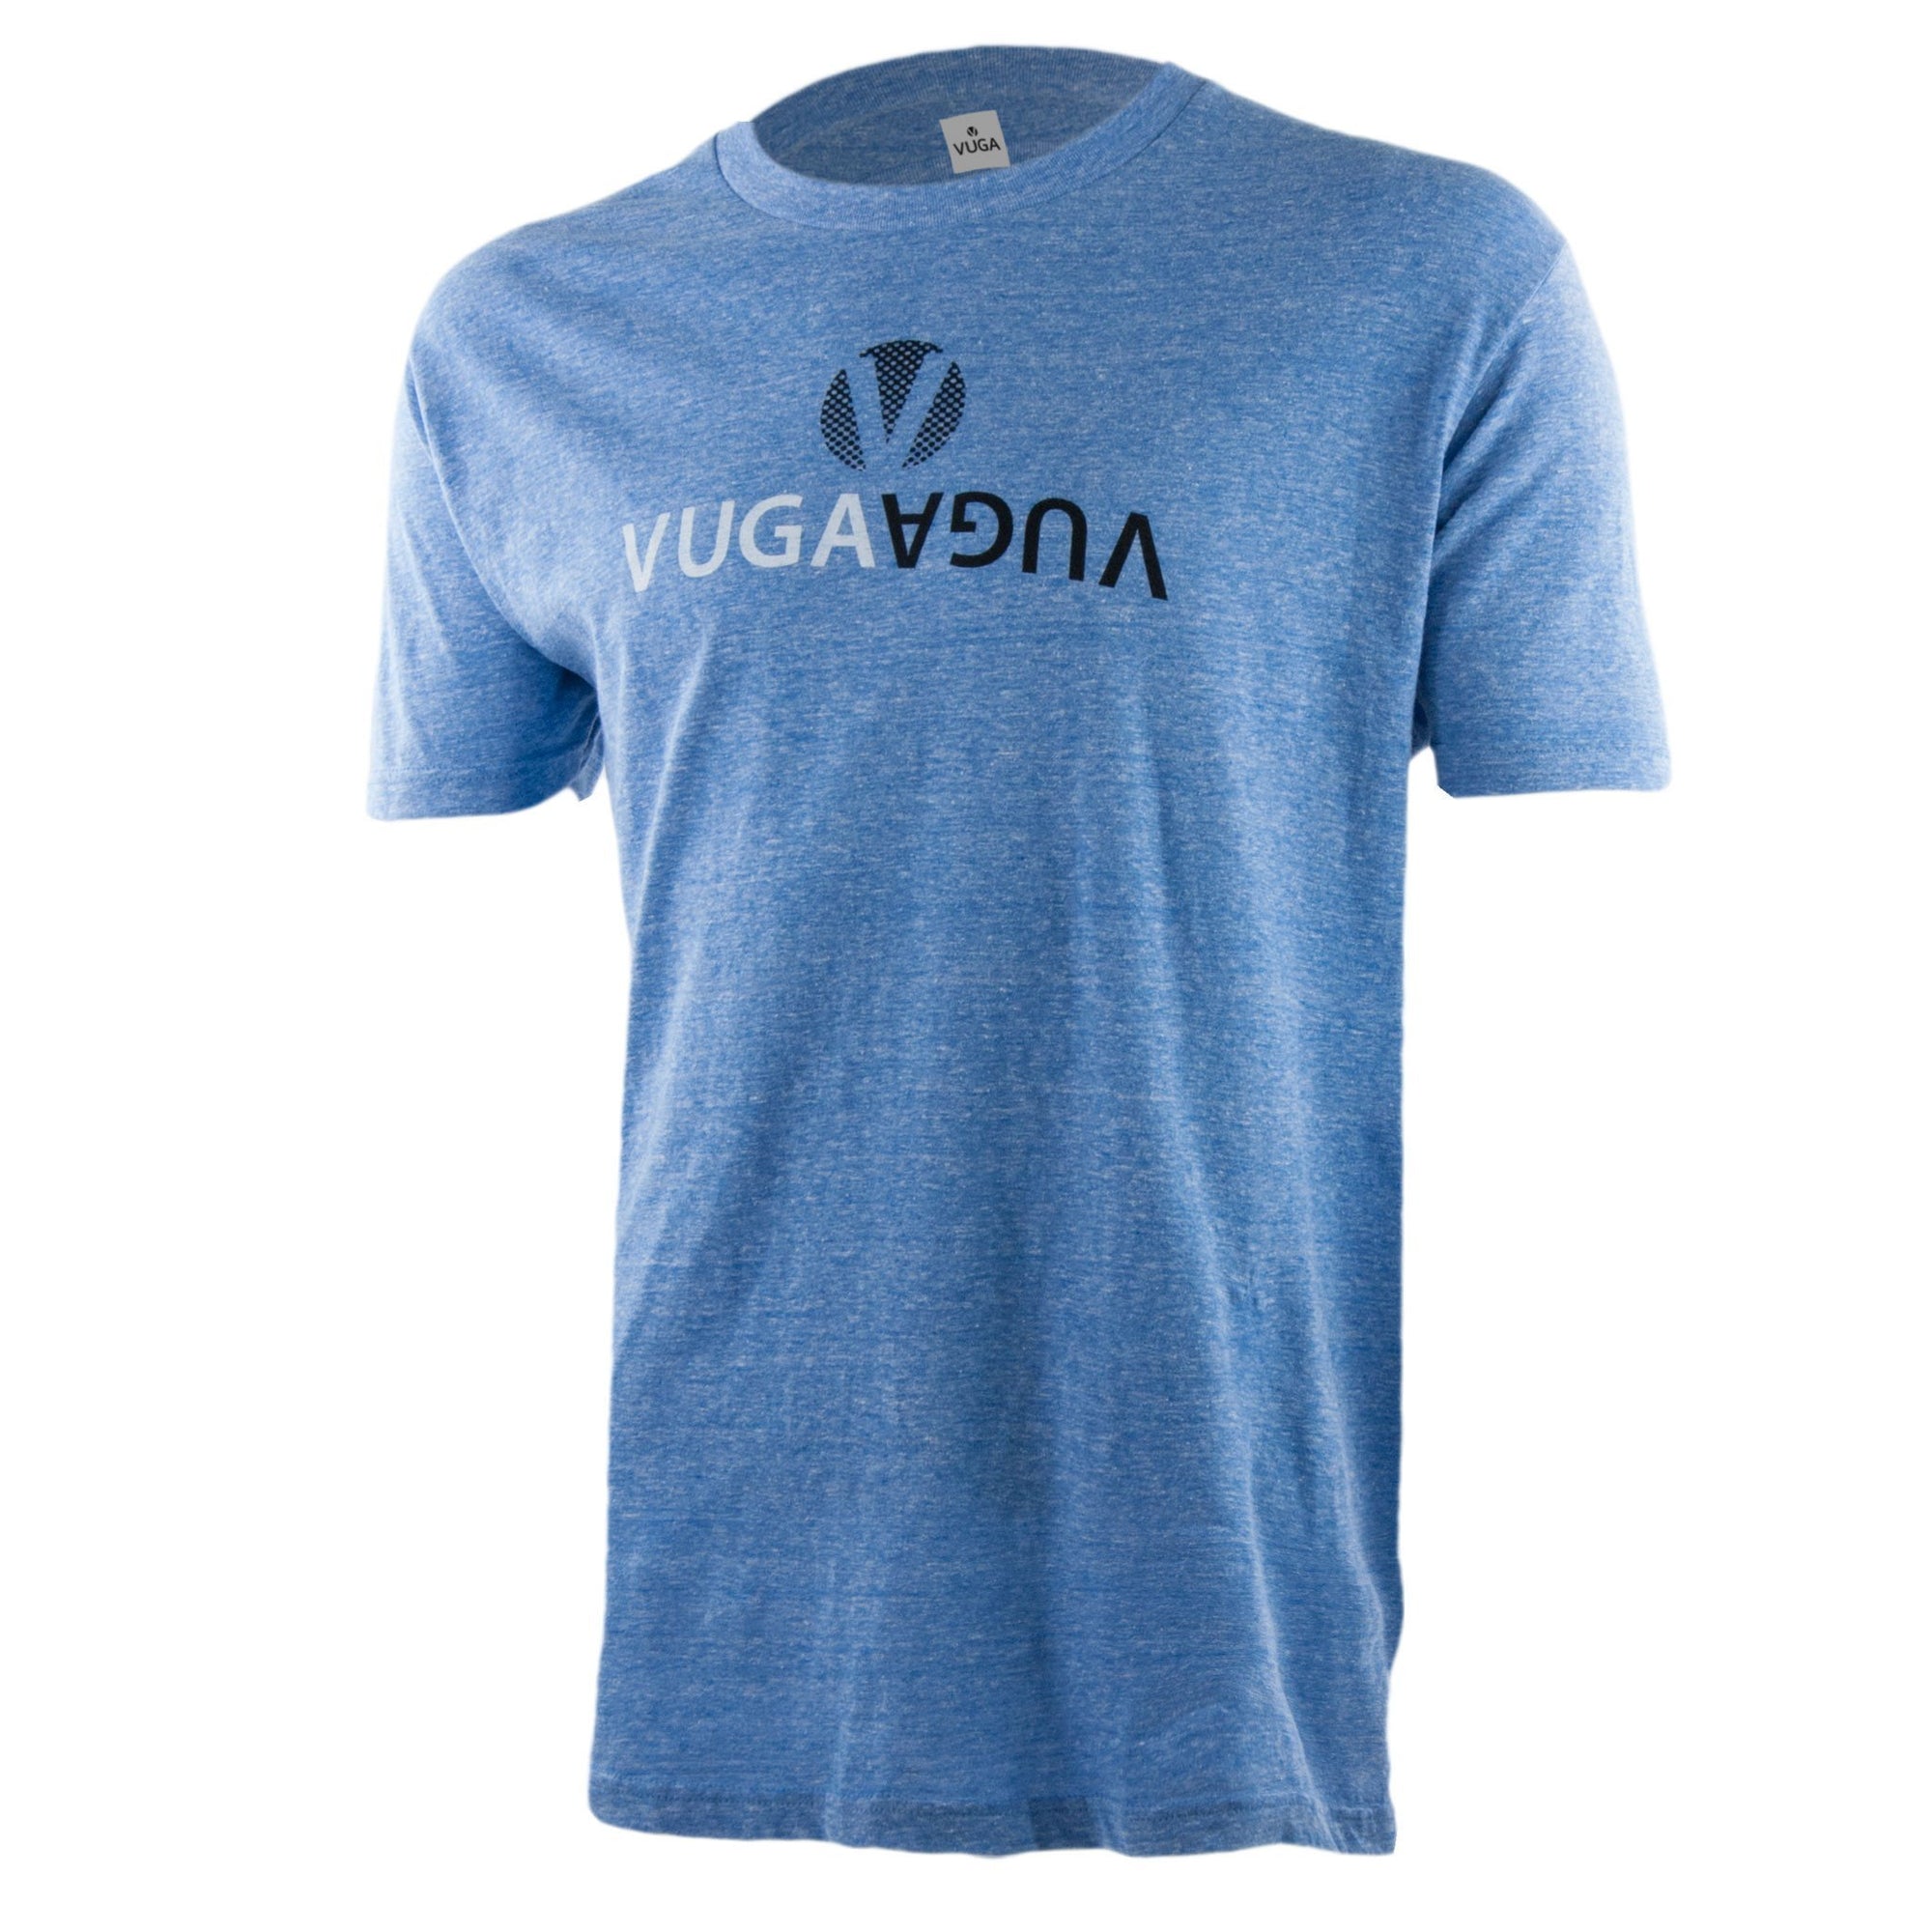 VUGA - Collective Logo Tee in Blue Heather